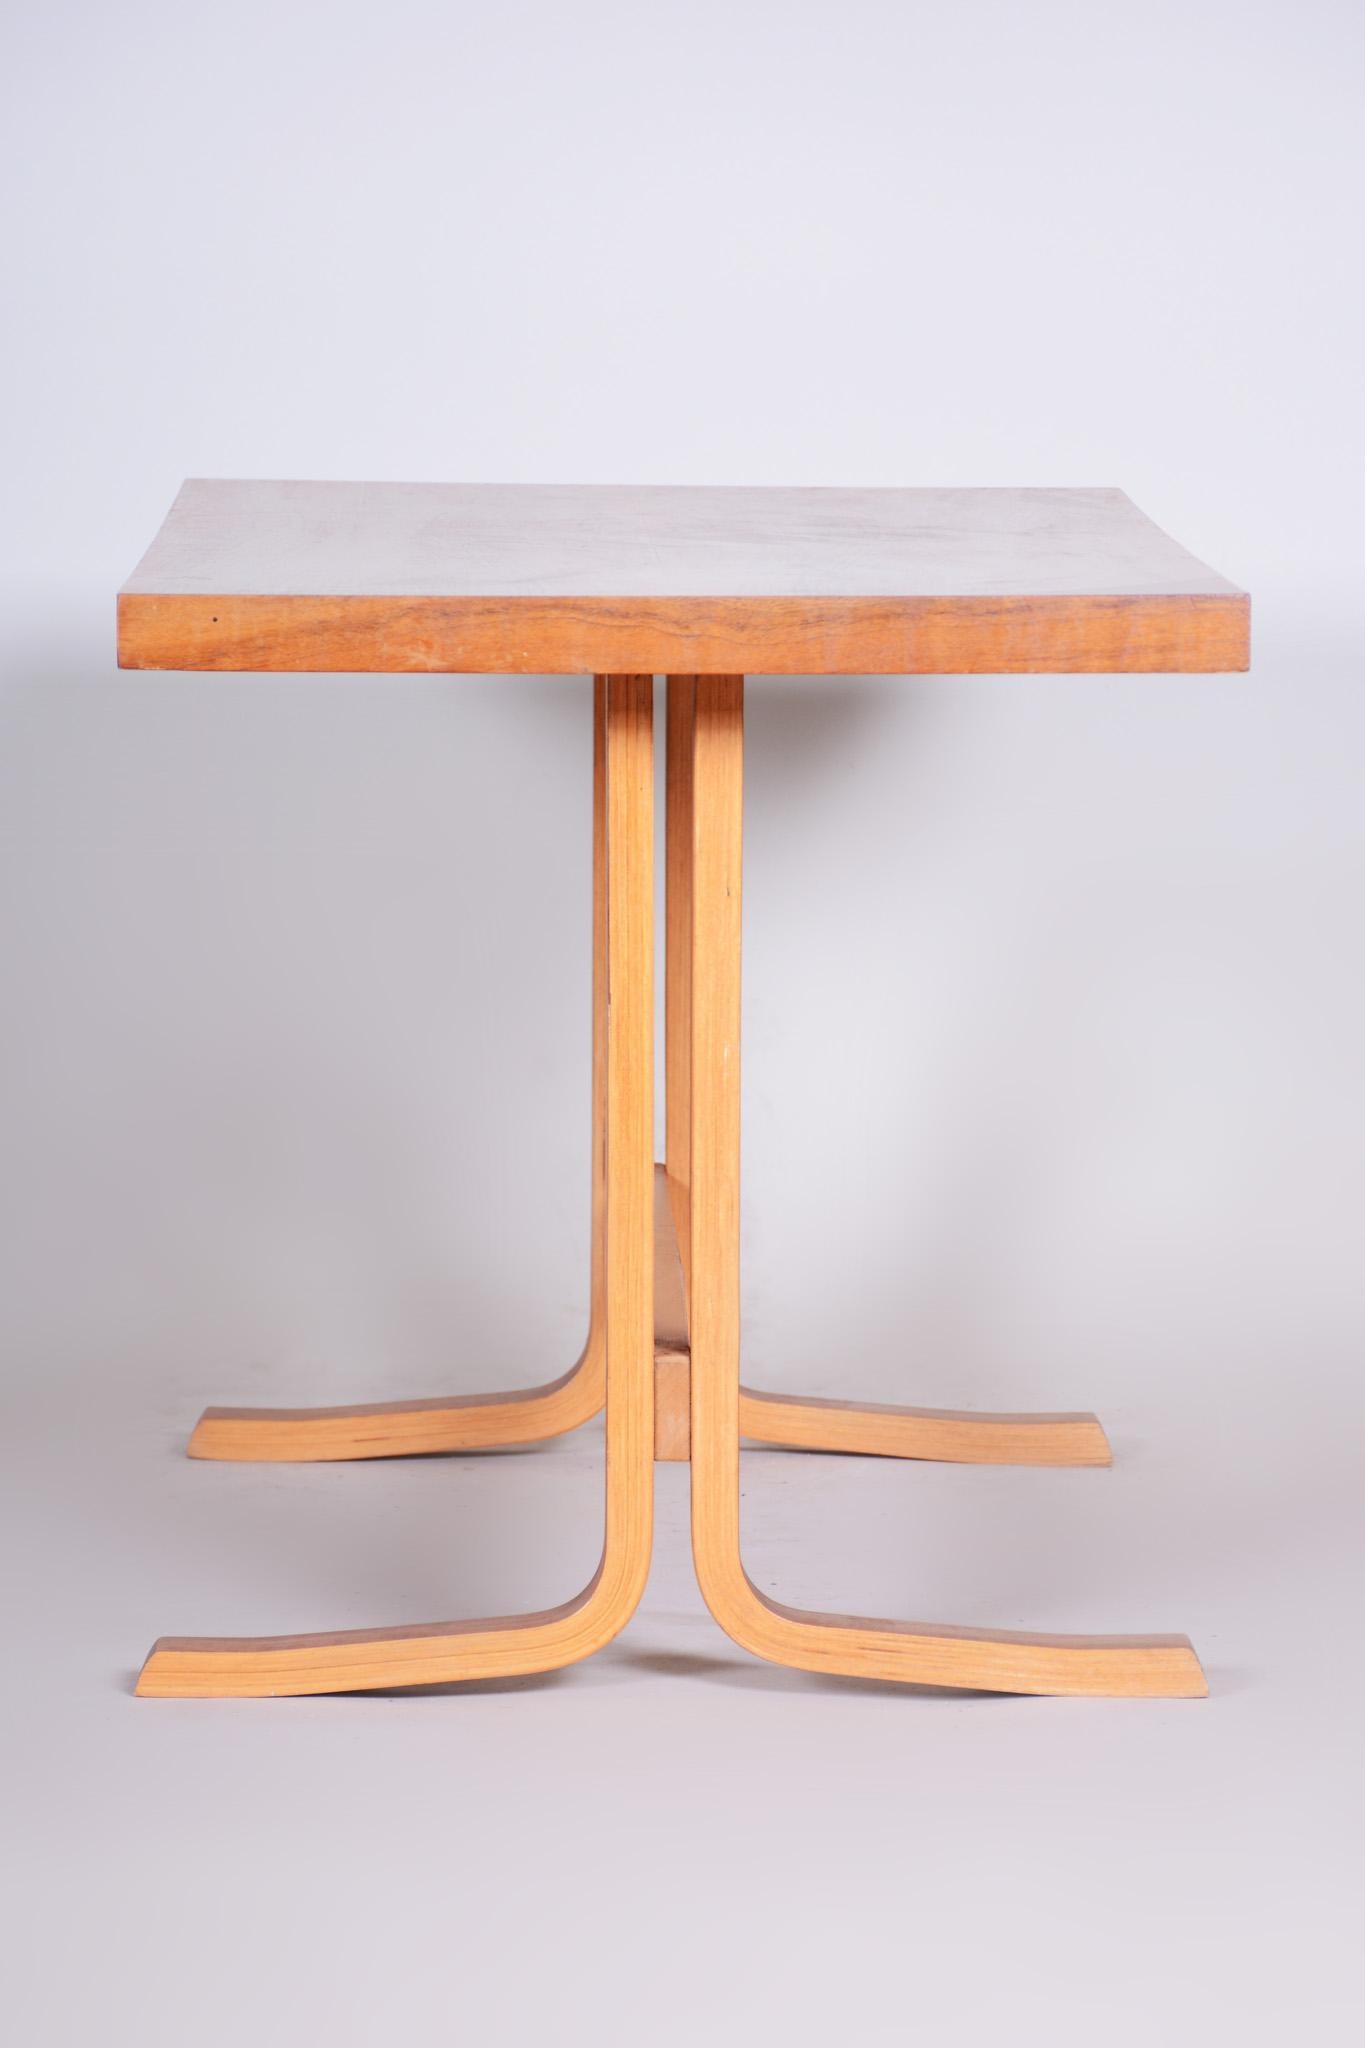 Original Rectangular Oak Table, Czech Mid-Century Modern, 1960s For Sale 3